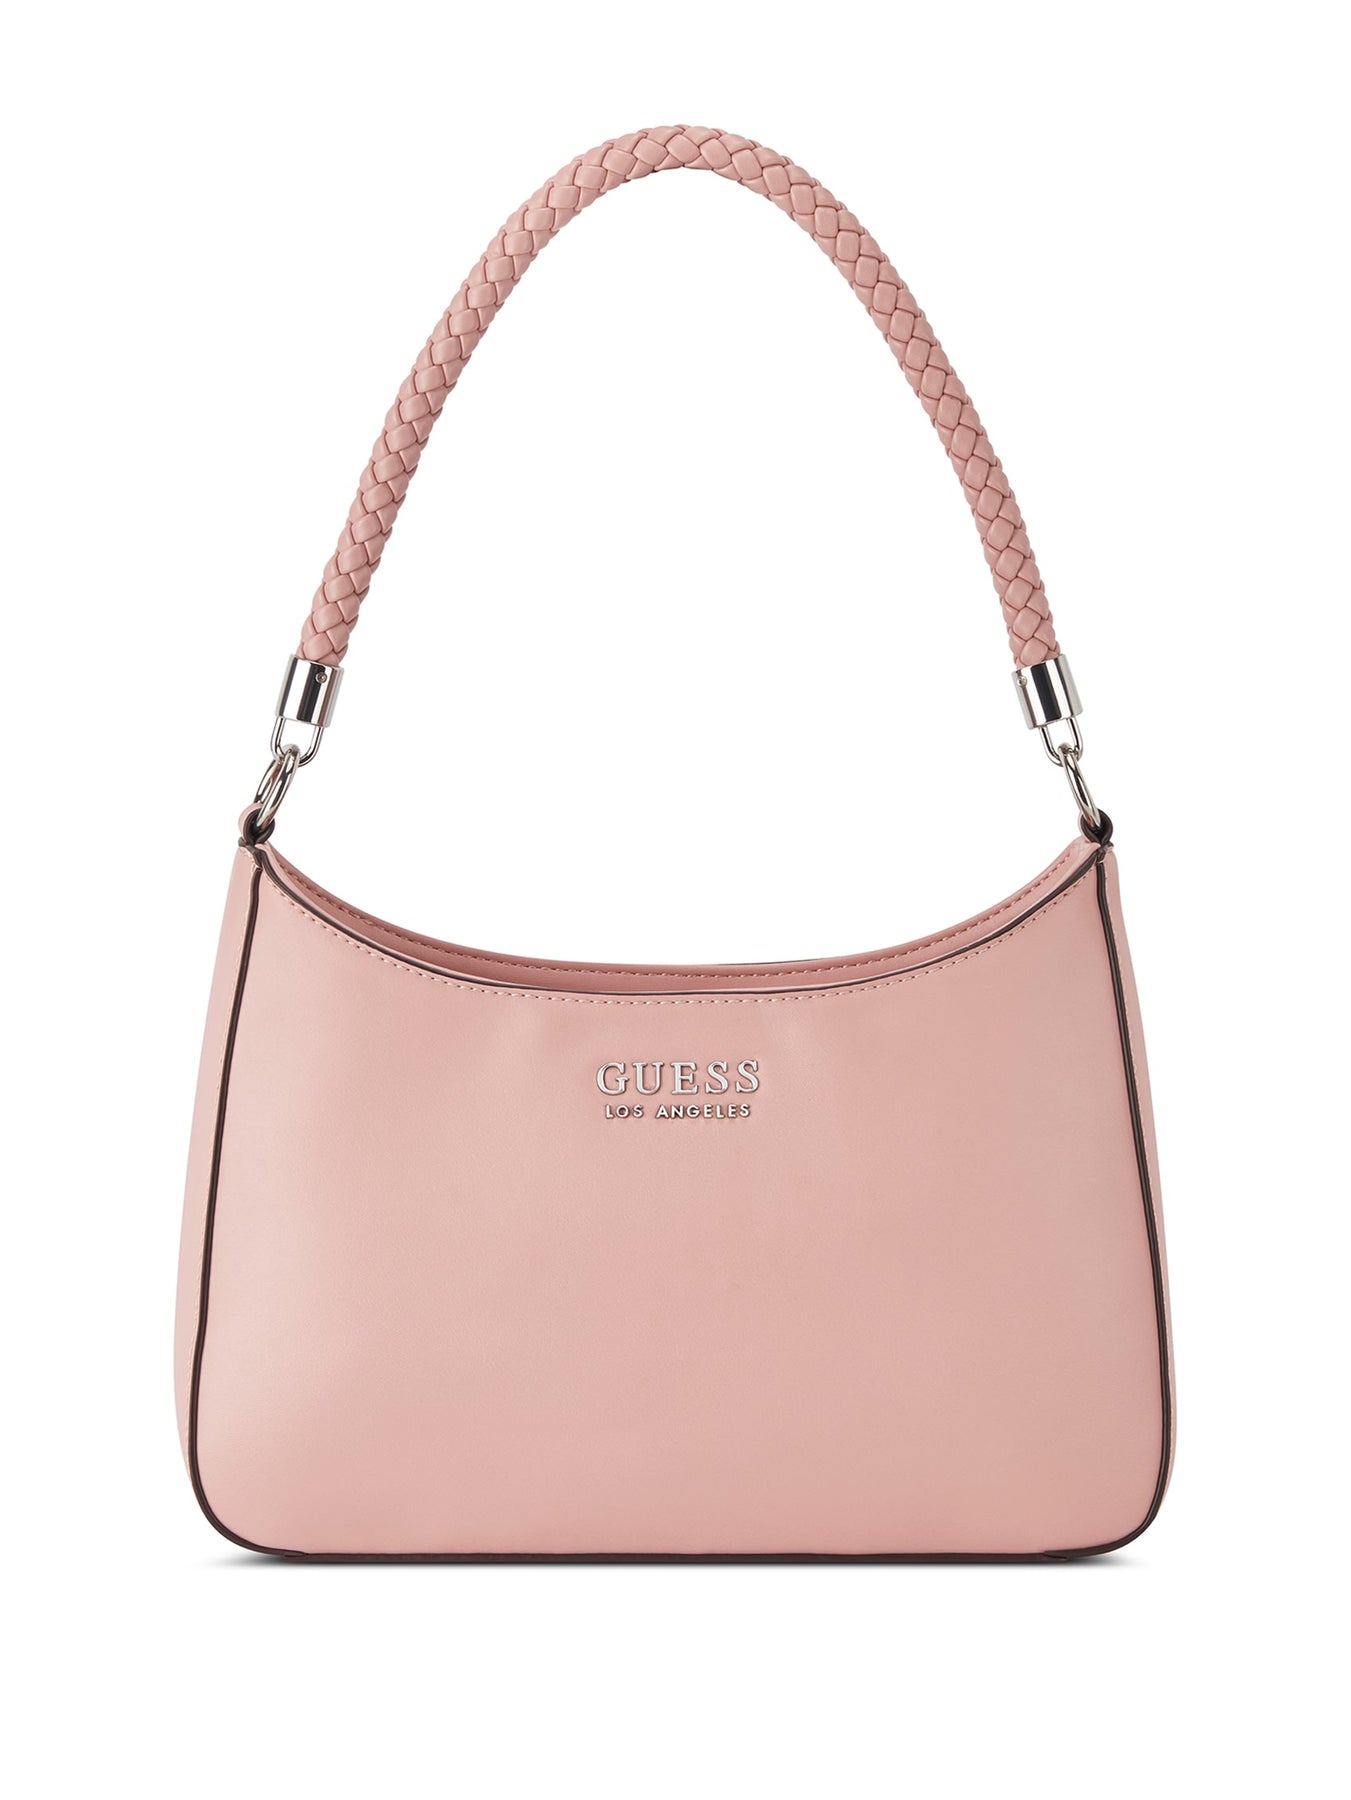 Guess Factory Curtin Top-Zip Shoulder Bag | Shop Premium Outlets